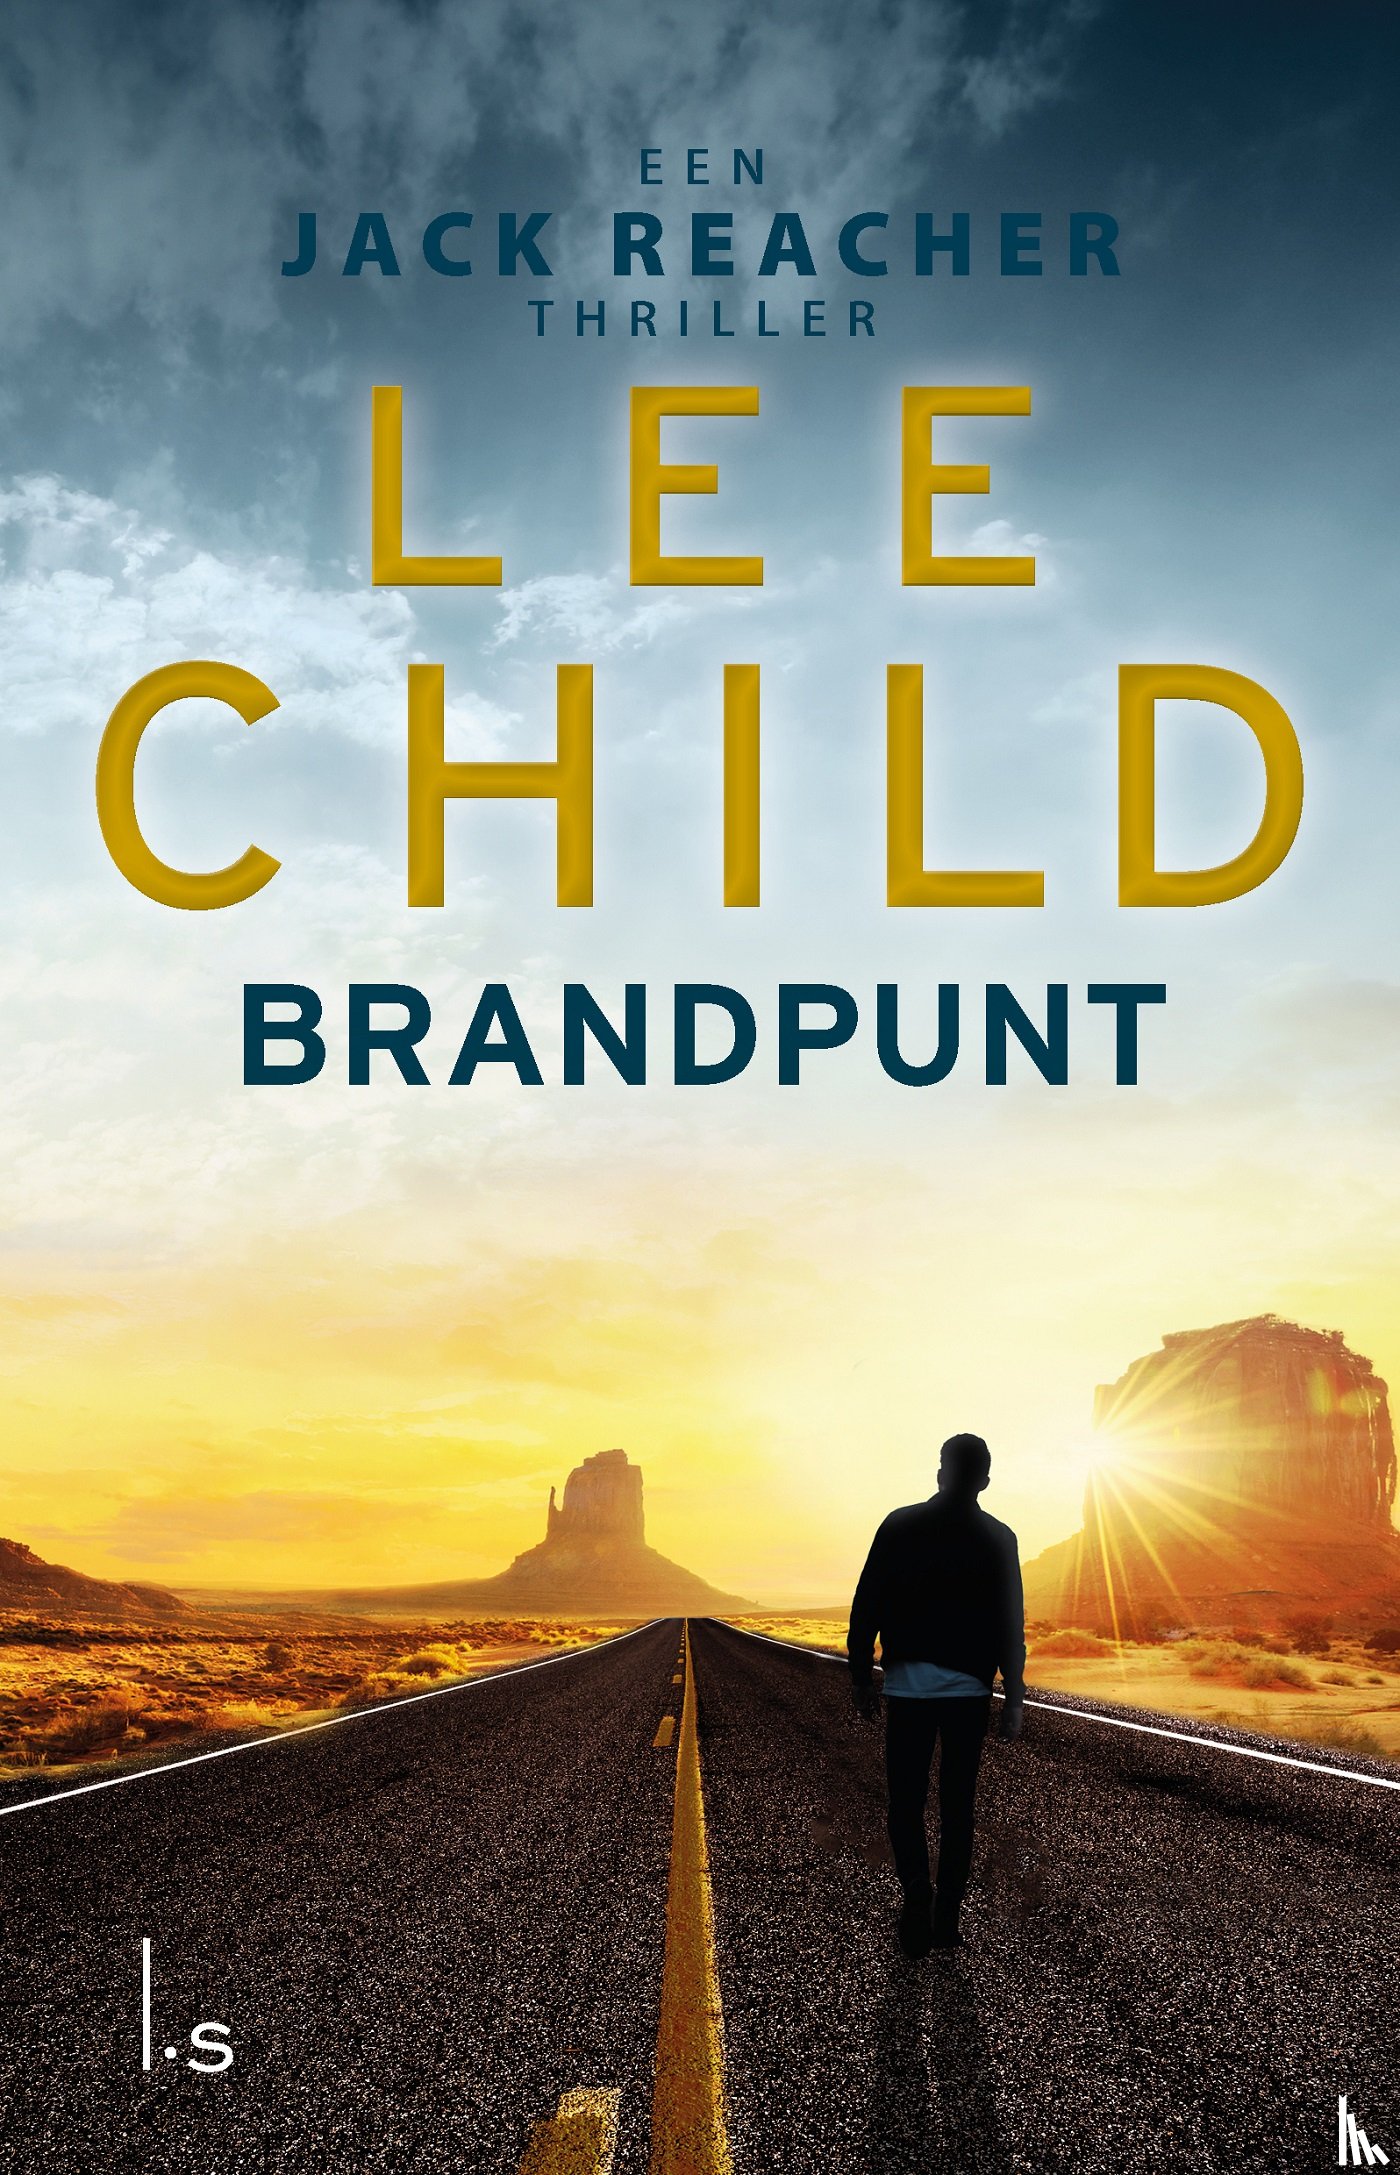 Child, Lee - Brandpunt